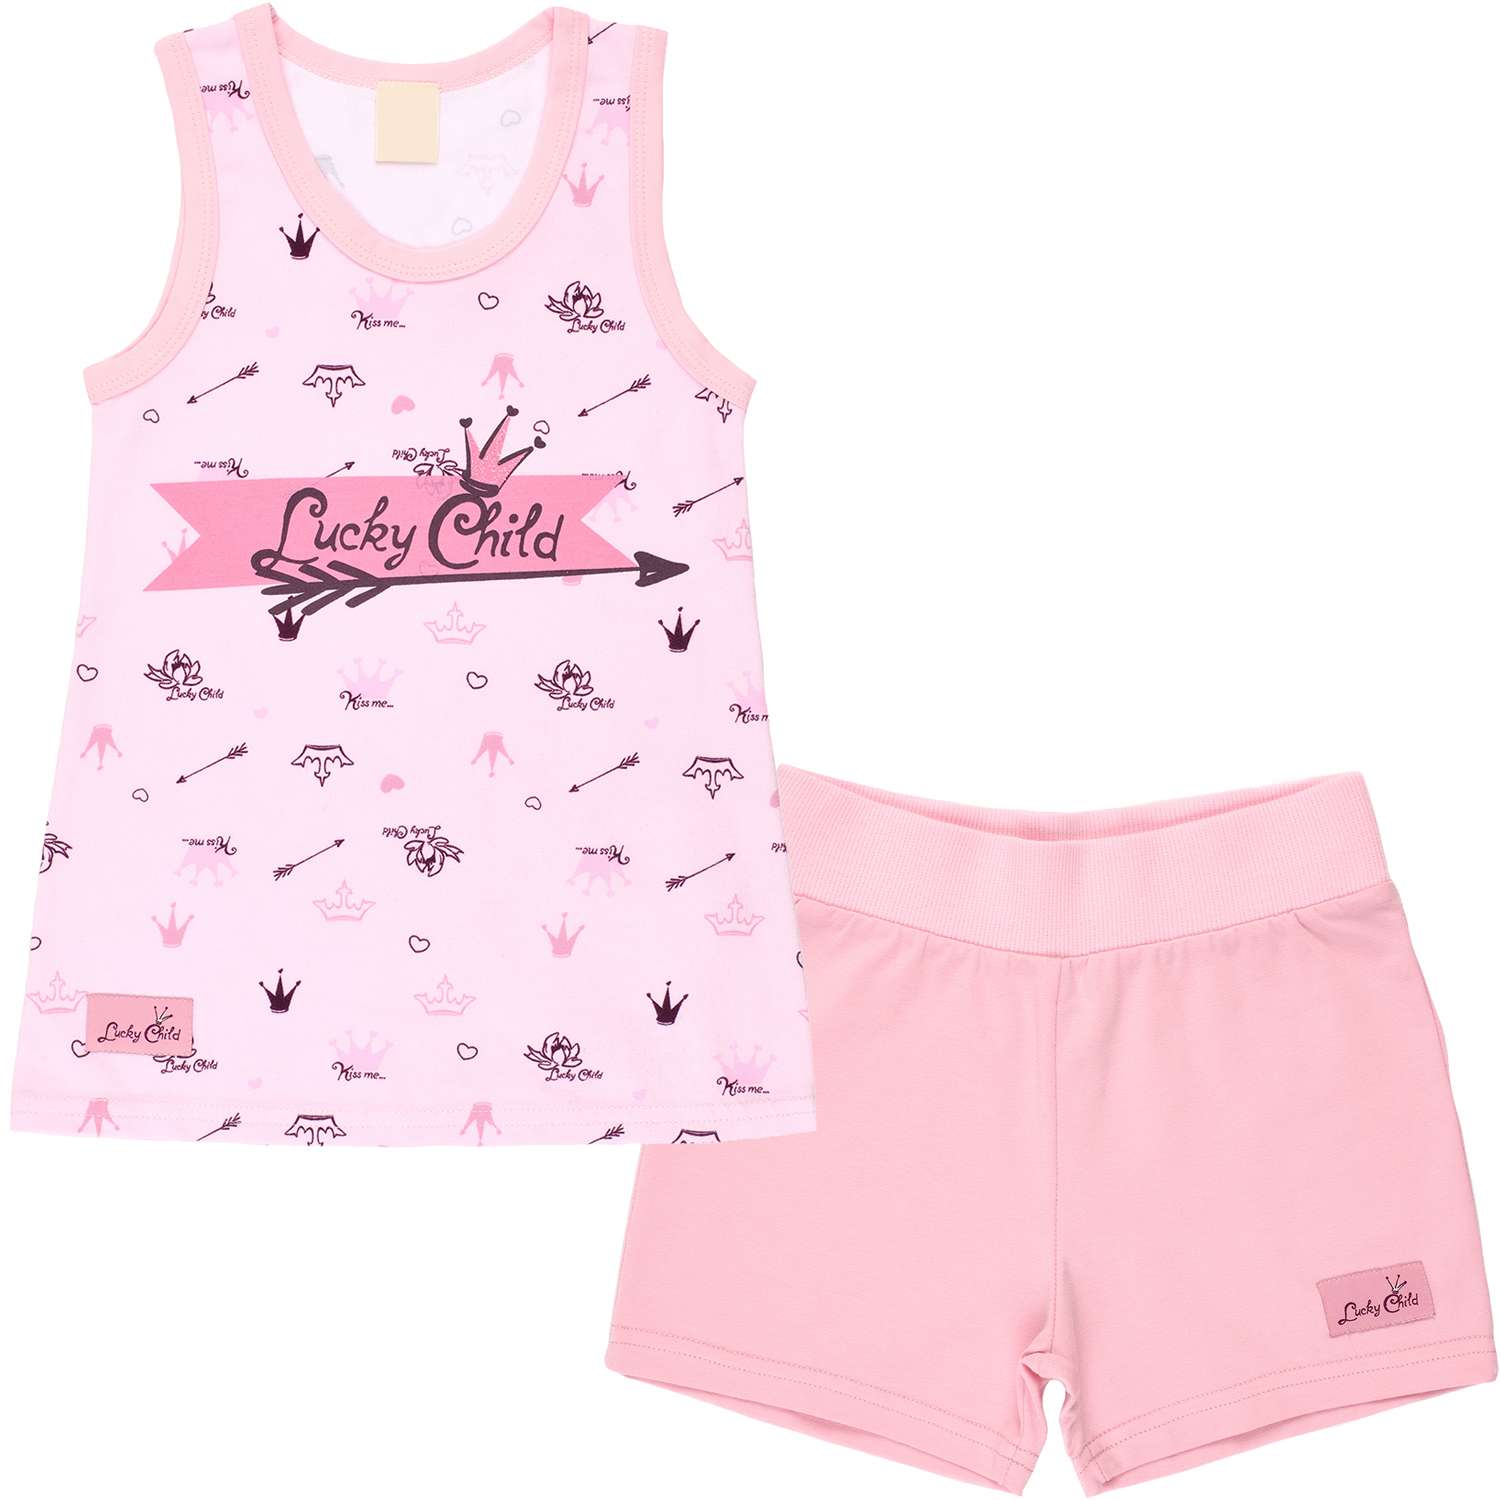 Пижама Lucky Child 45-412к/0-2/розовый/короны - фото 1